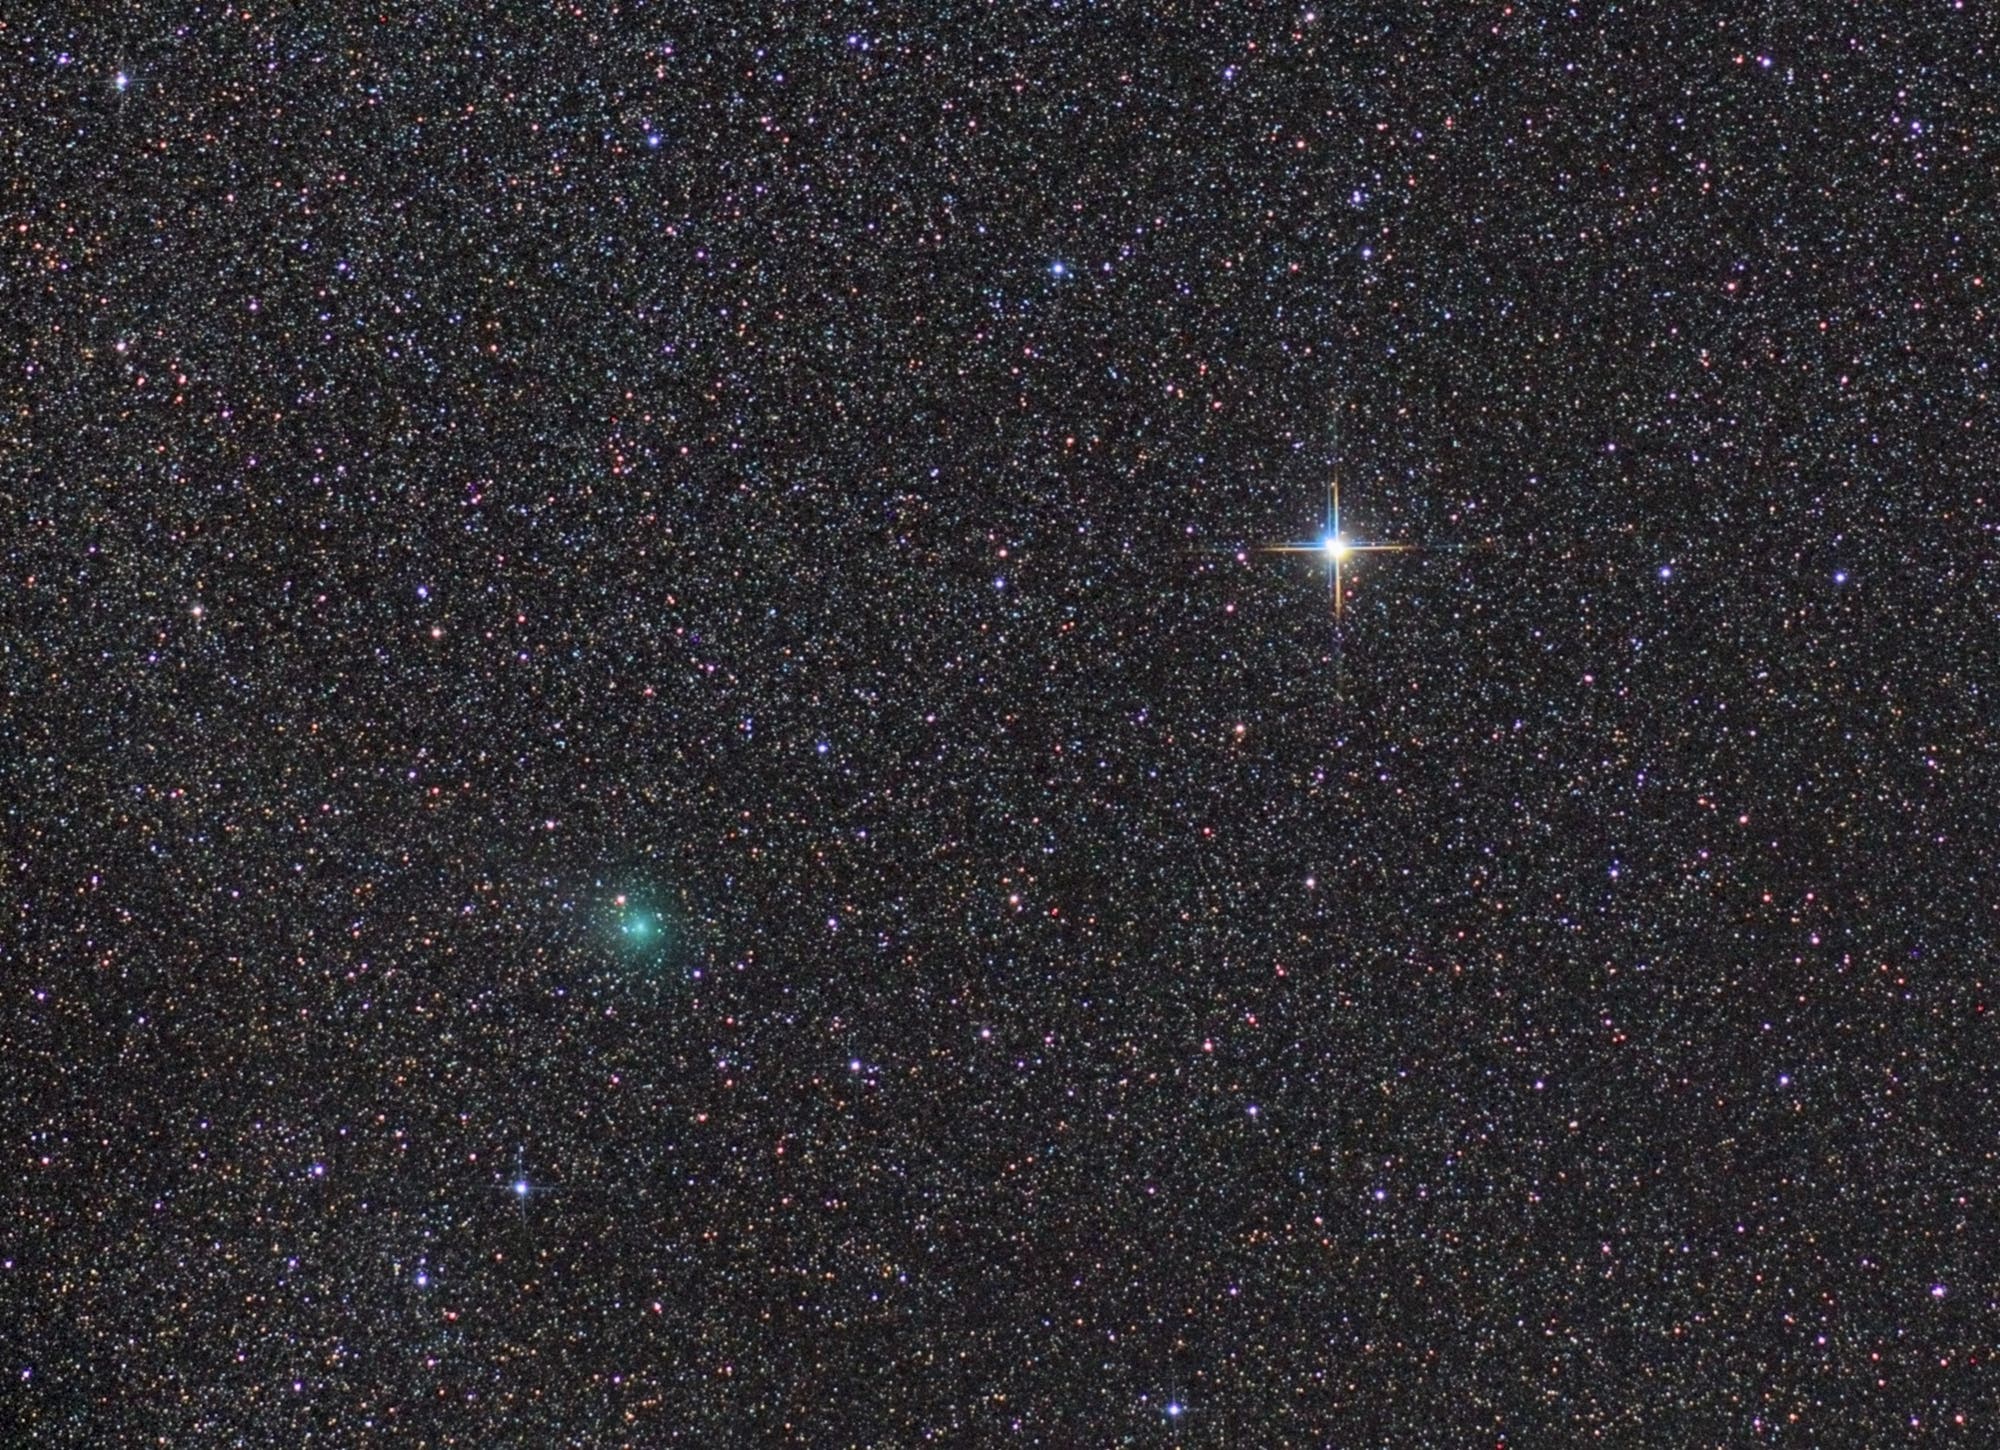 Komet Jacques bei Albireo